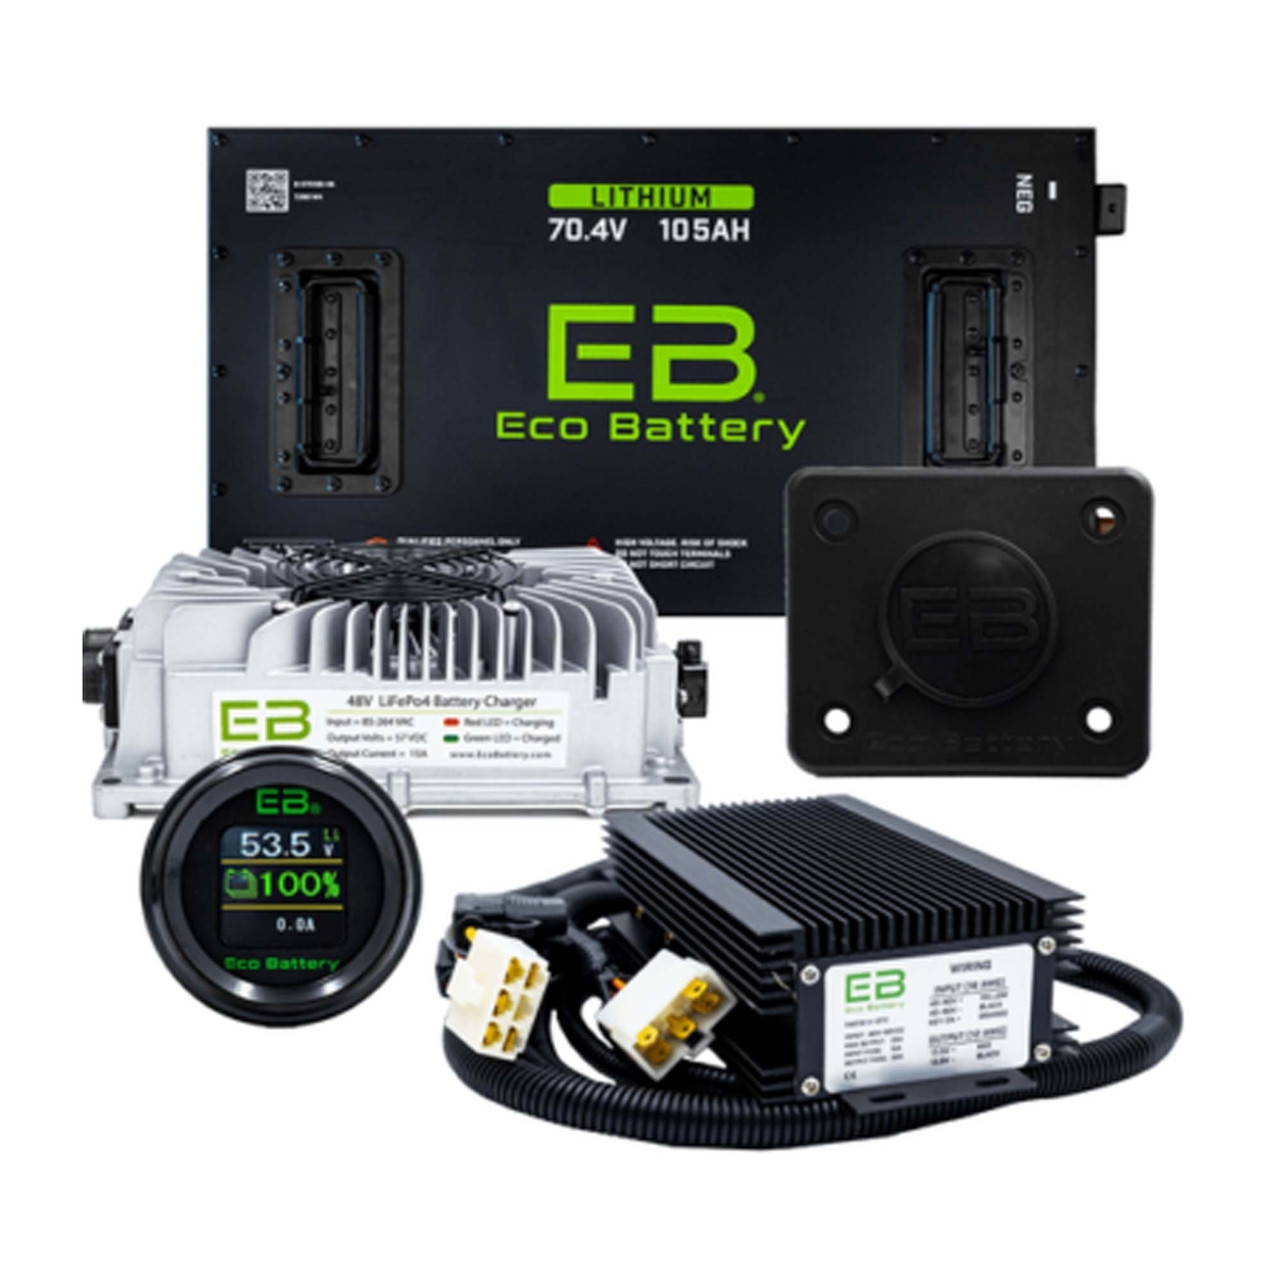 Eco Battery 70V 105Ah LifePo4 EZGO Freedom RXV Golf Cart Lithium Battery Bundle Kit with Charger & 12V Converter, B-3234